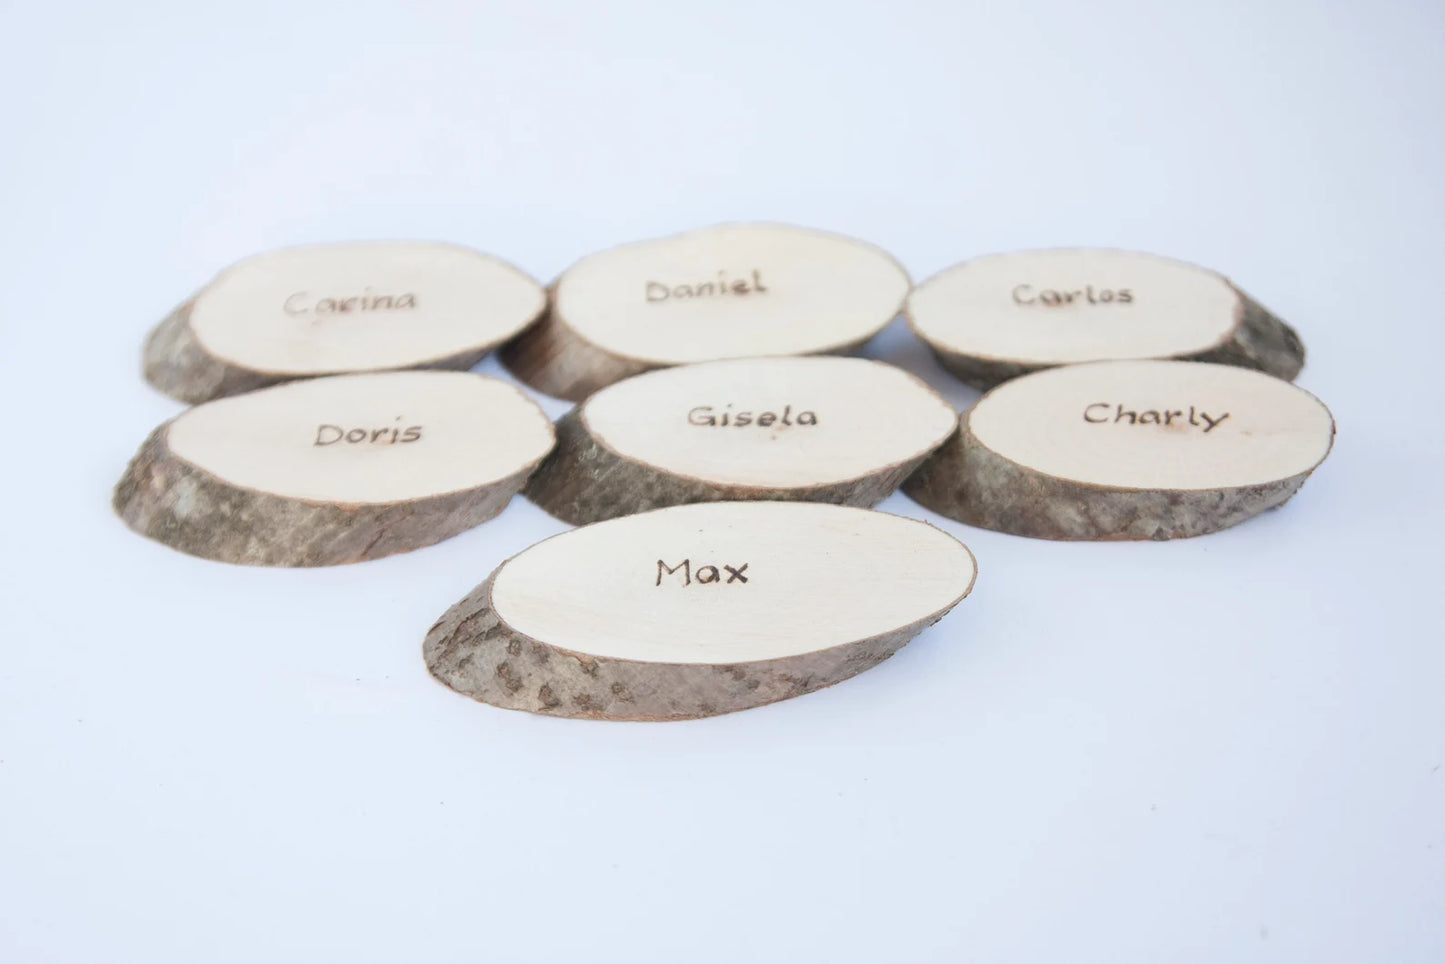 Disco ovale in legno per creazioni